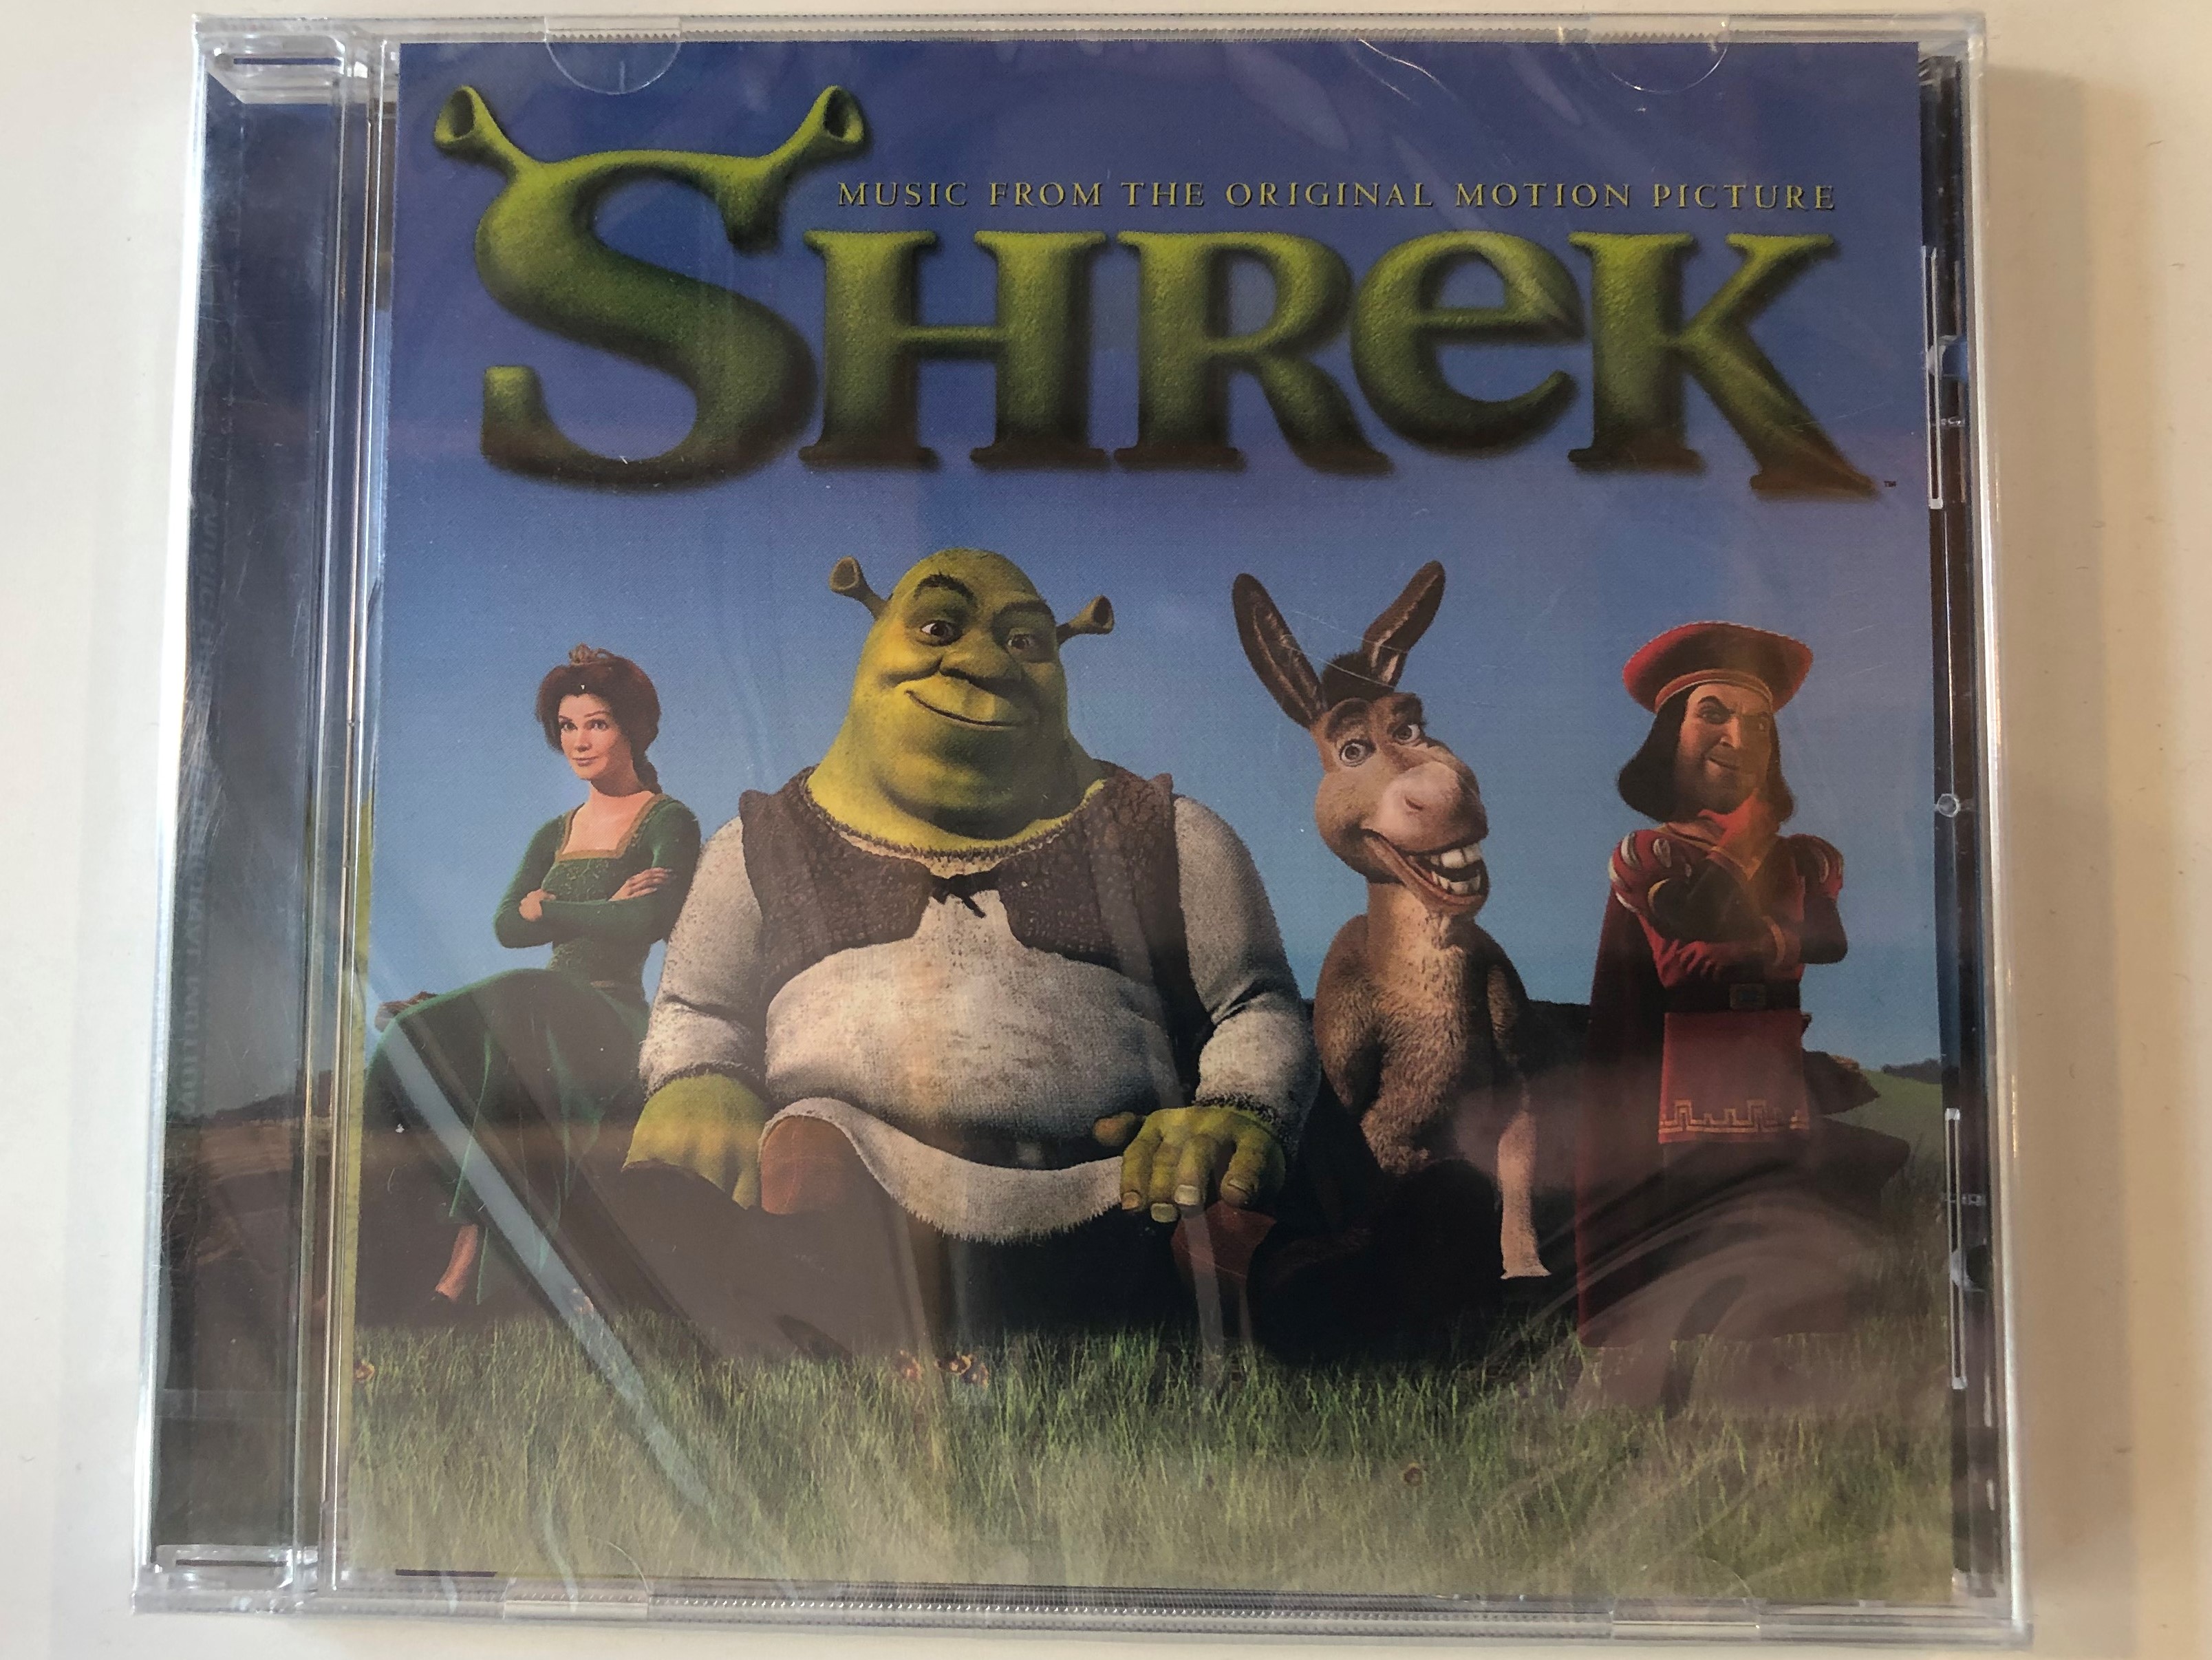 shrek-music-from-the-original-motion-picture-dreamworks-records-audio-cd-2001-450-305-2-1-.jpg